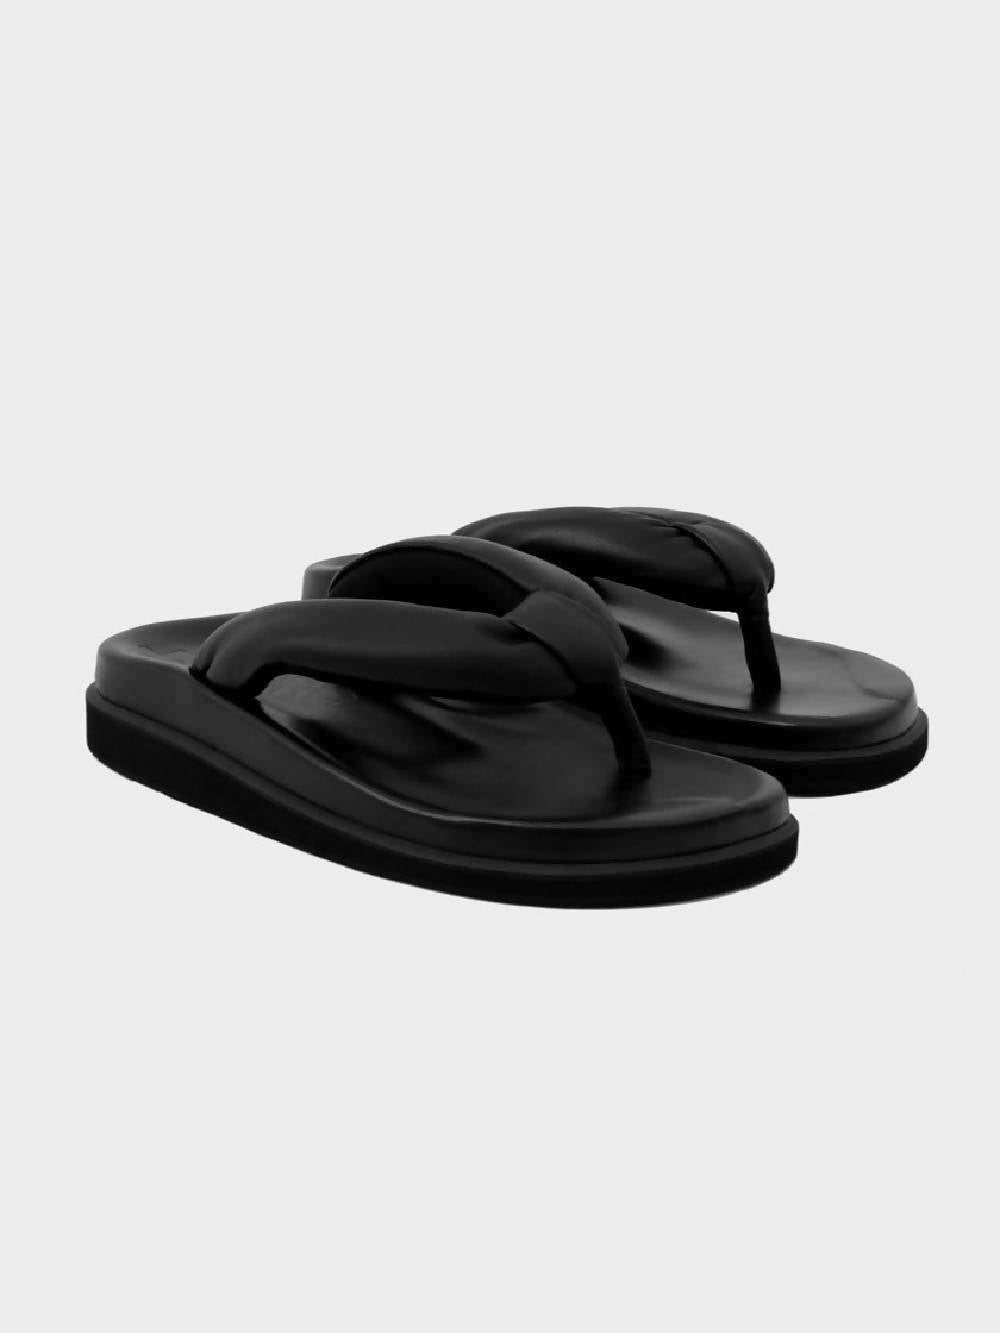 Sinobi Black Round Sandal